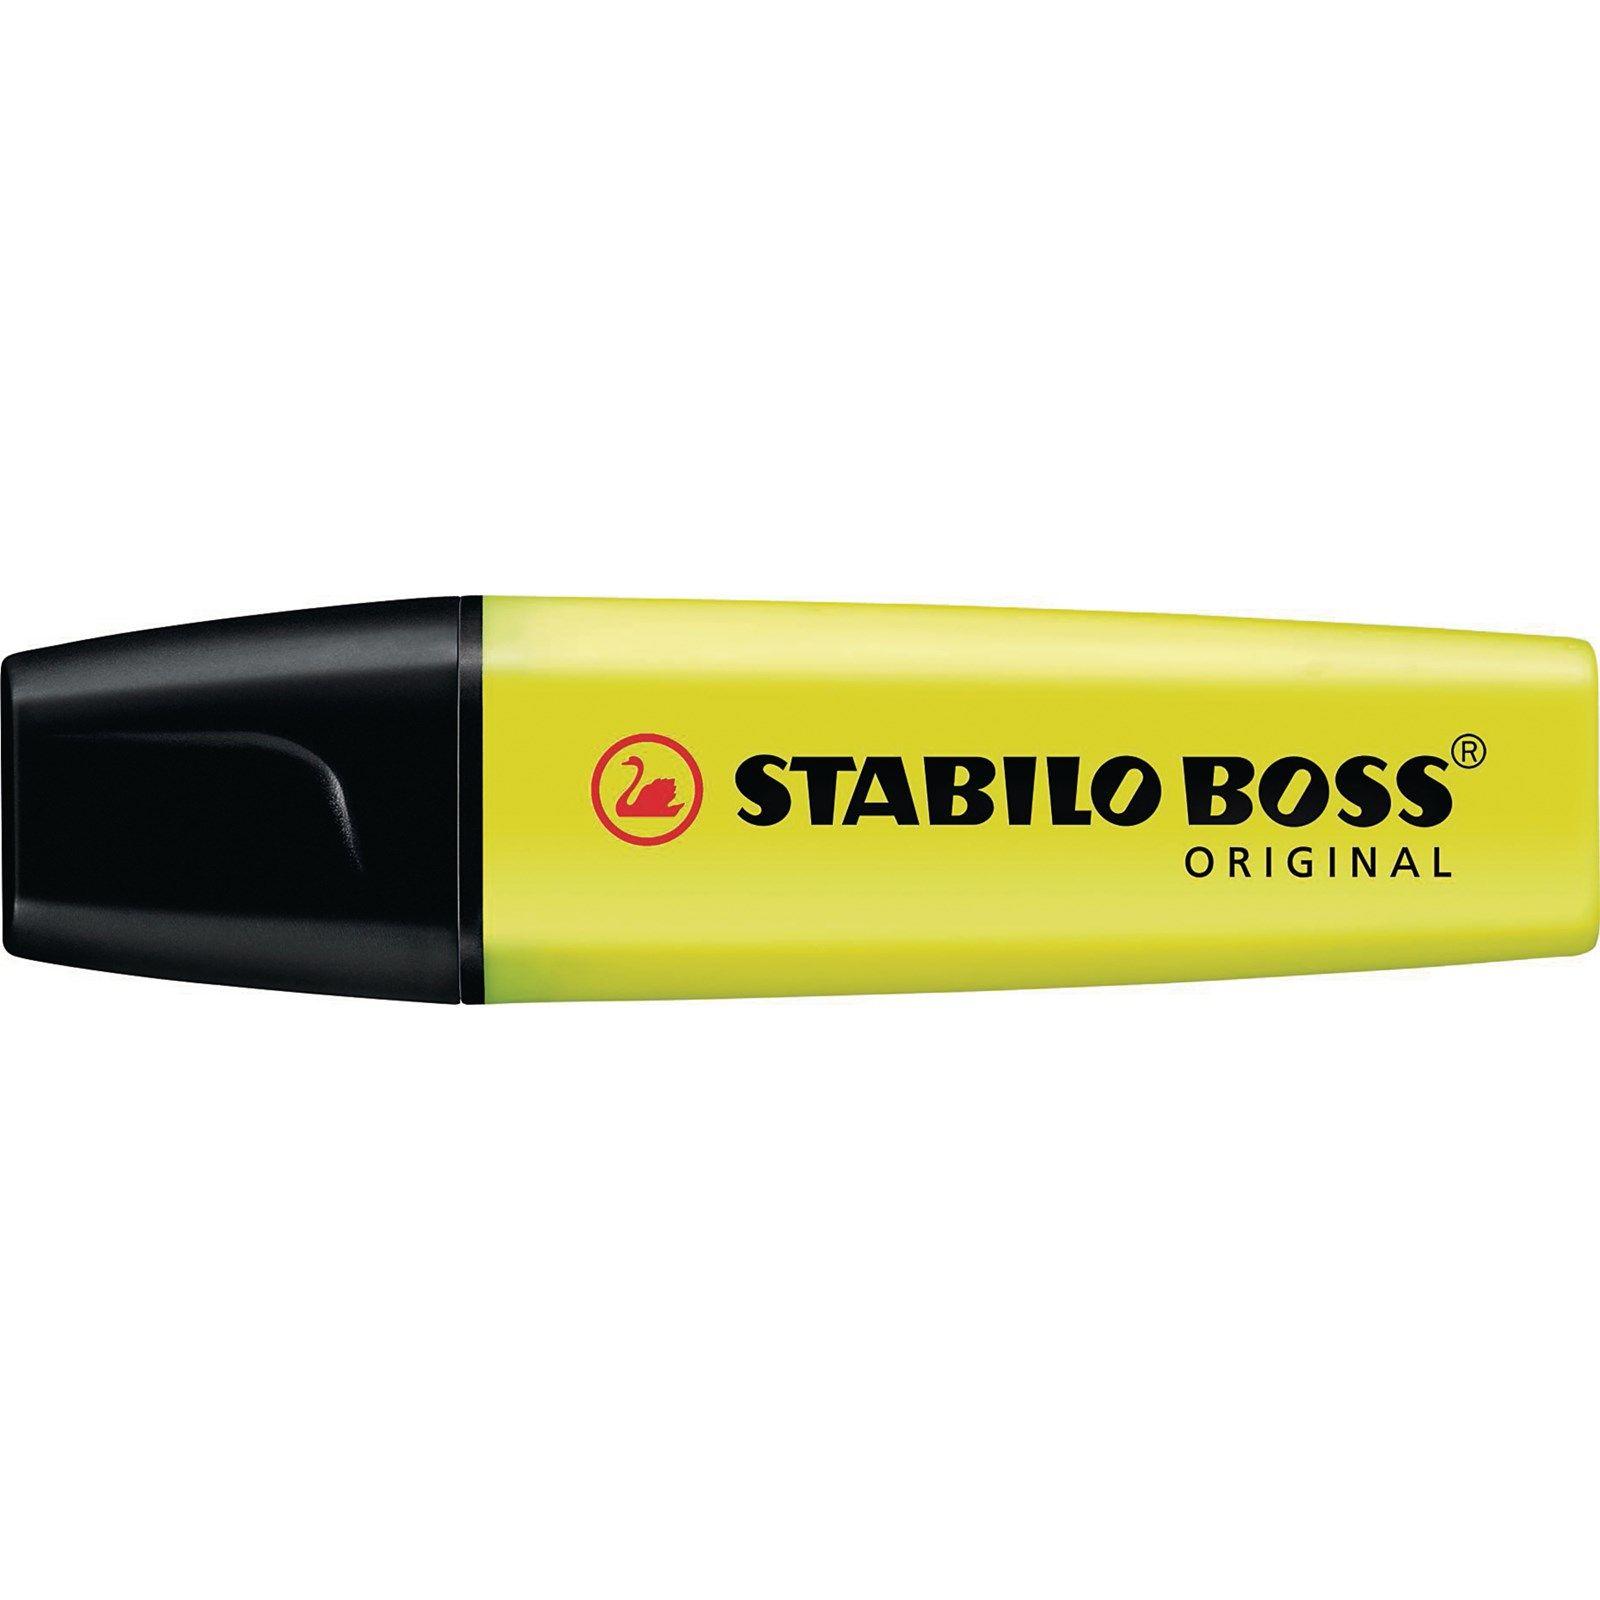 Highliter Yellow Logo - Stabilo Boss Original Highlighter Yellow - Pack of 10 | GLS ...